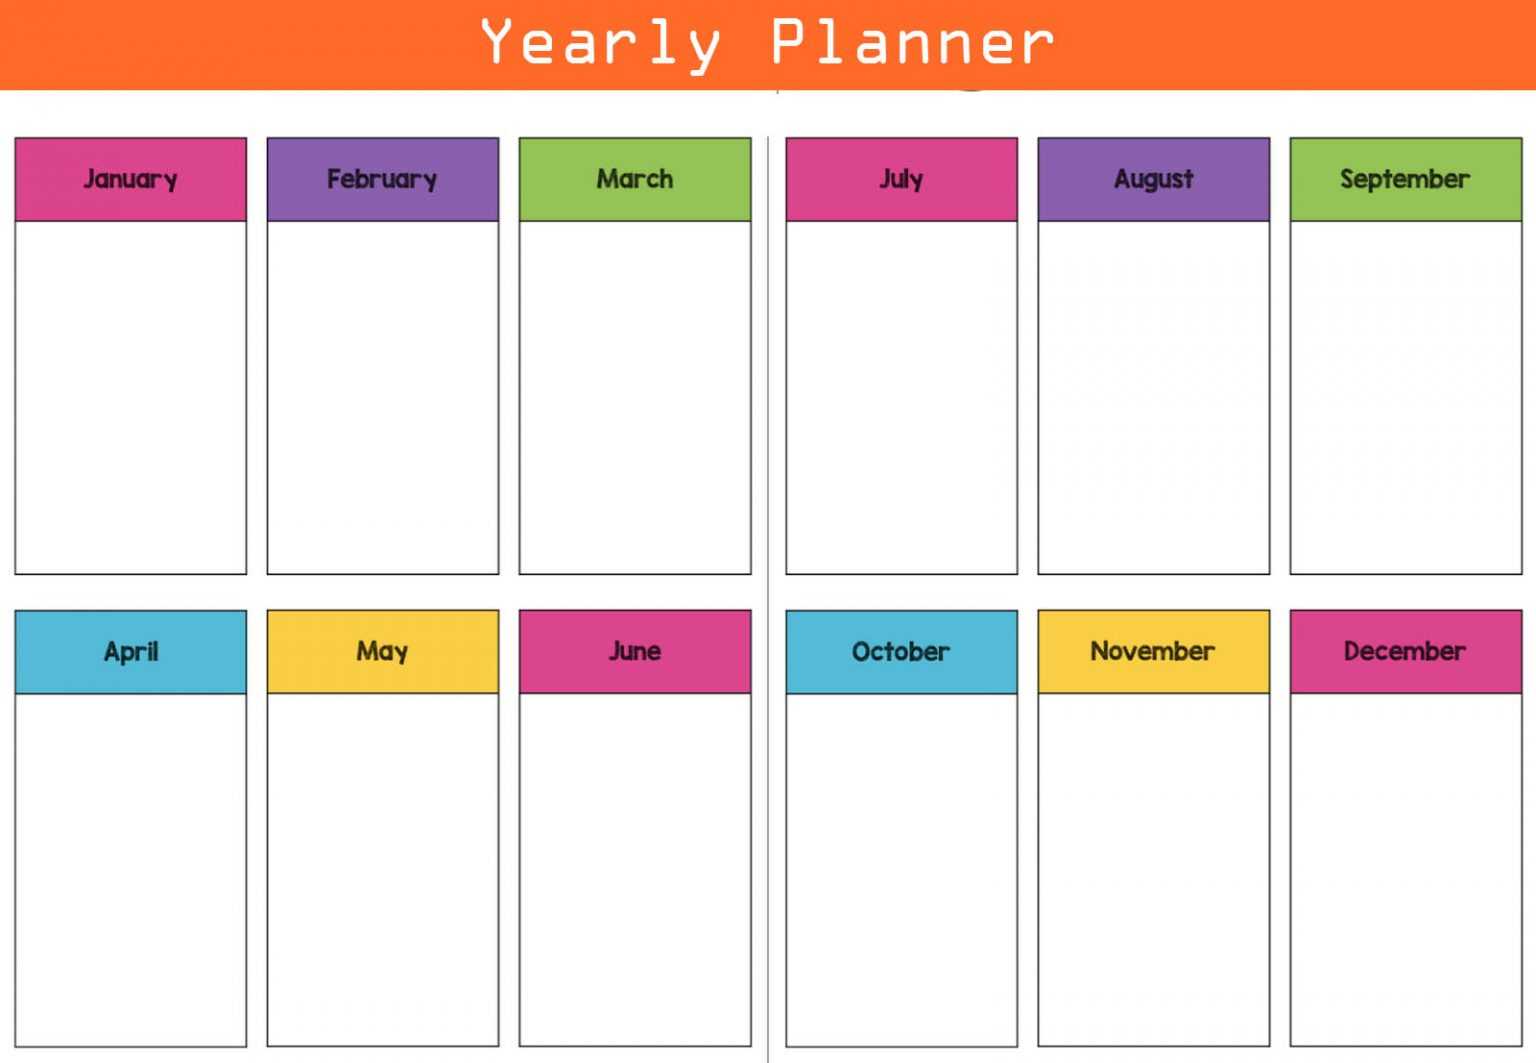 annual business planning calendar